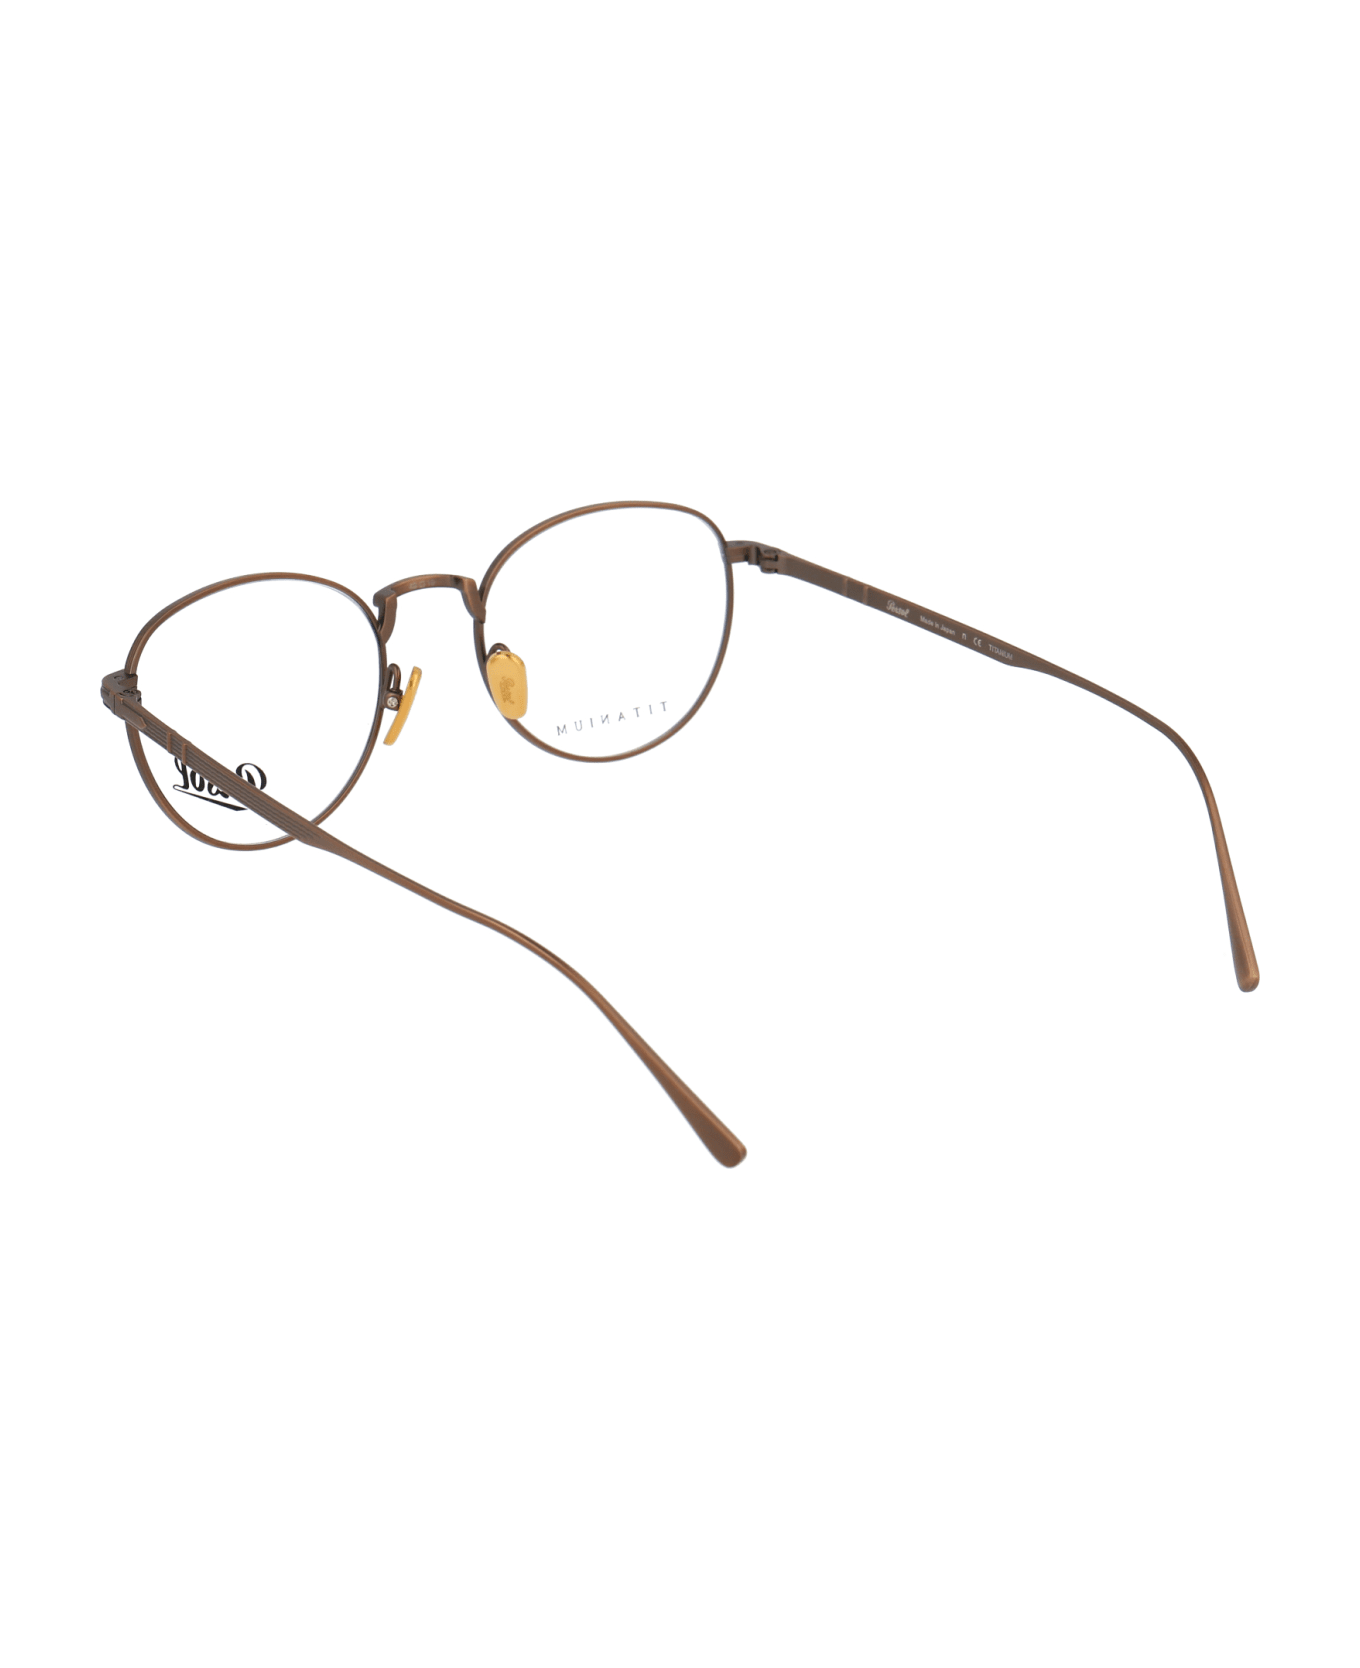 Persol 0po5002vt Glasses - 8003 BRONZE